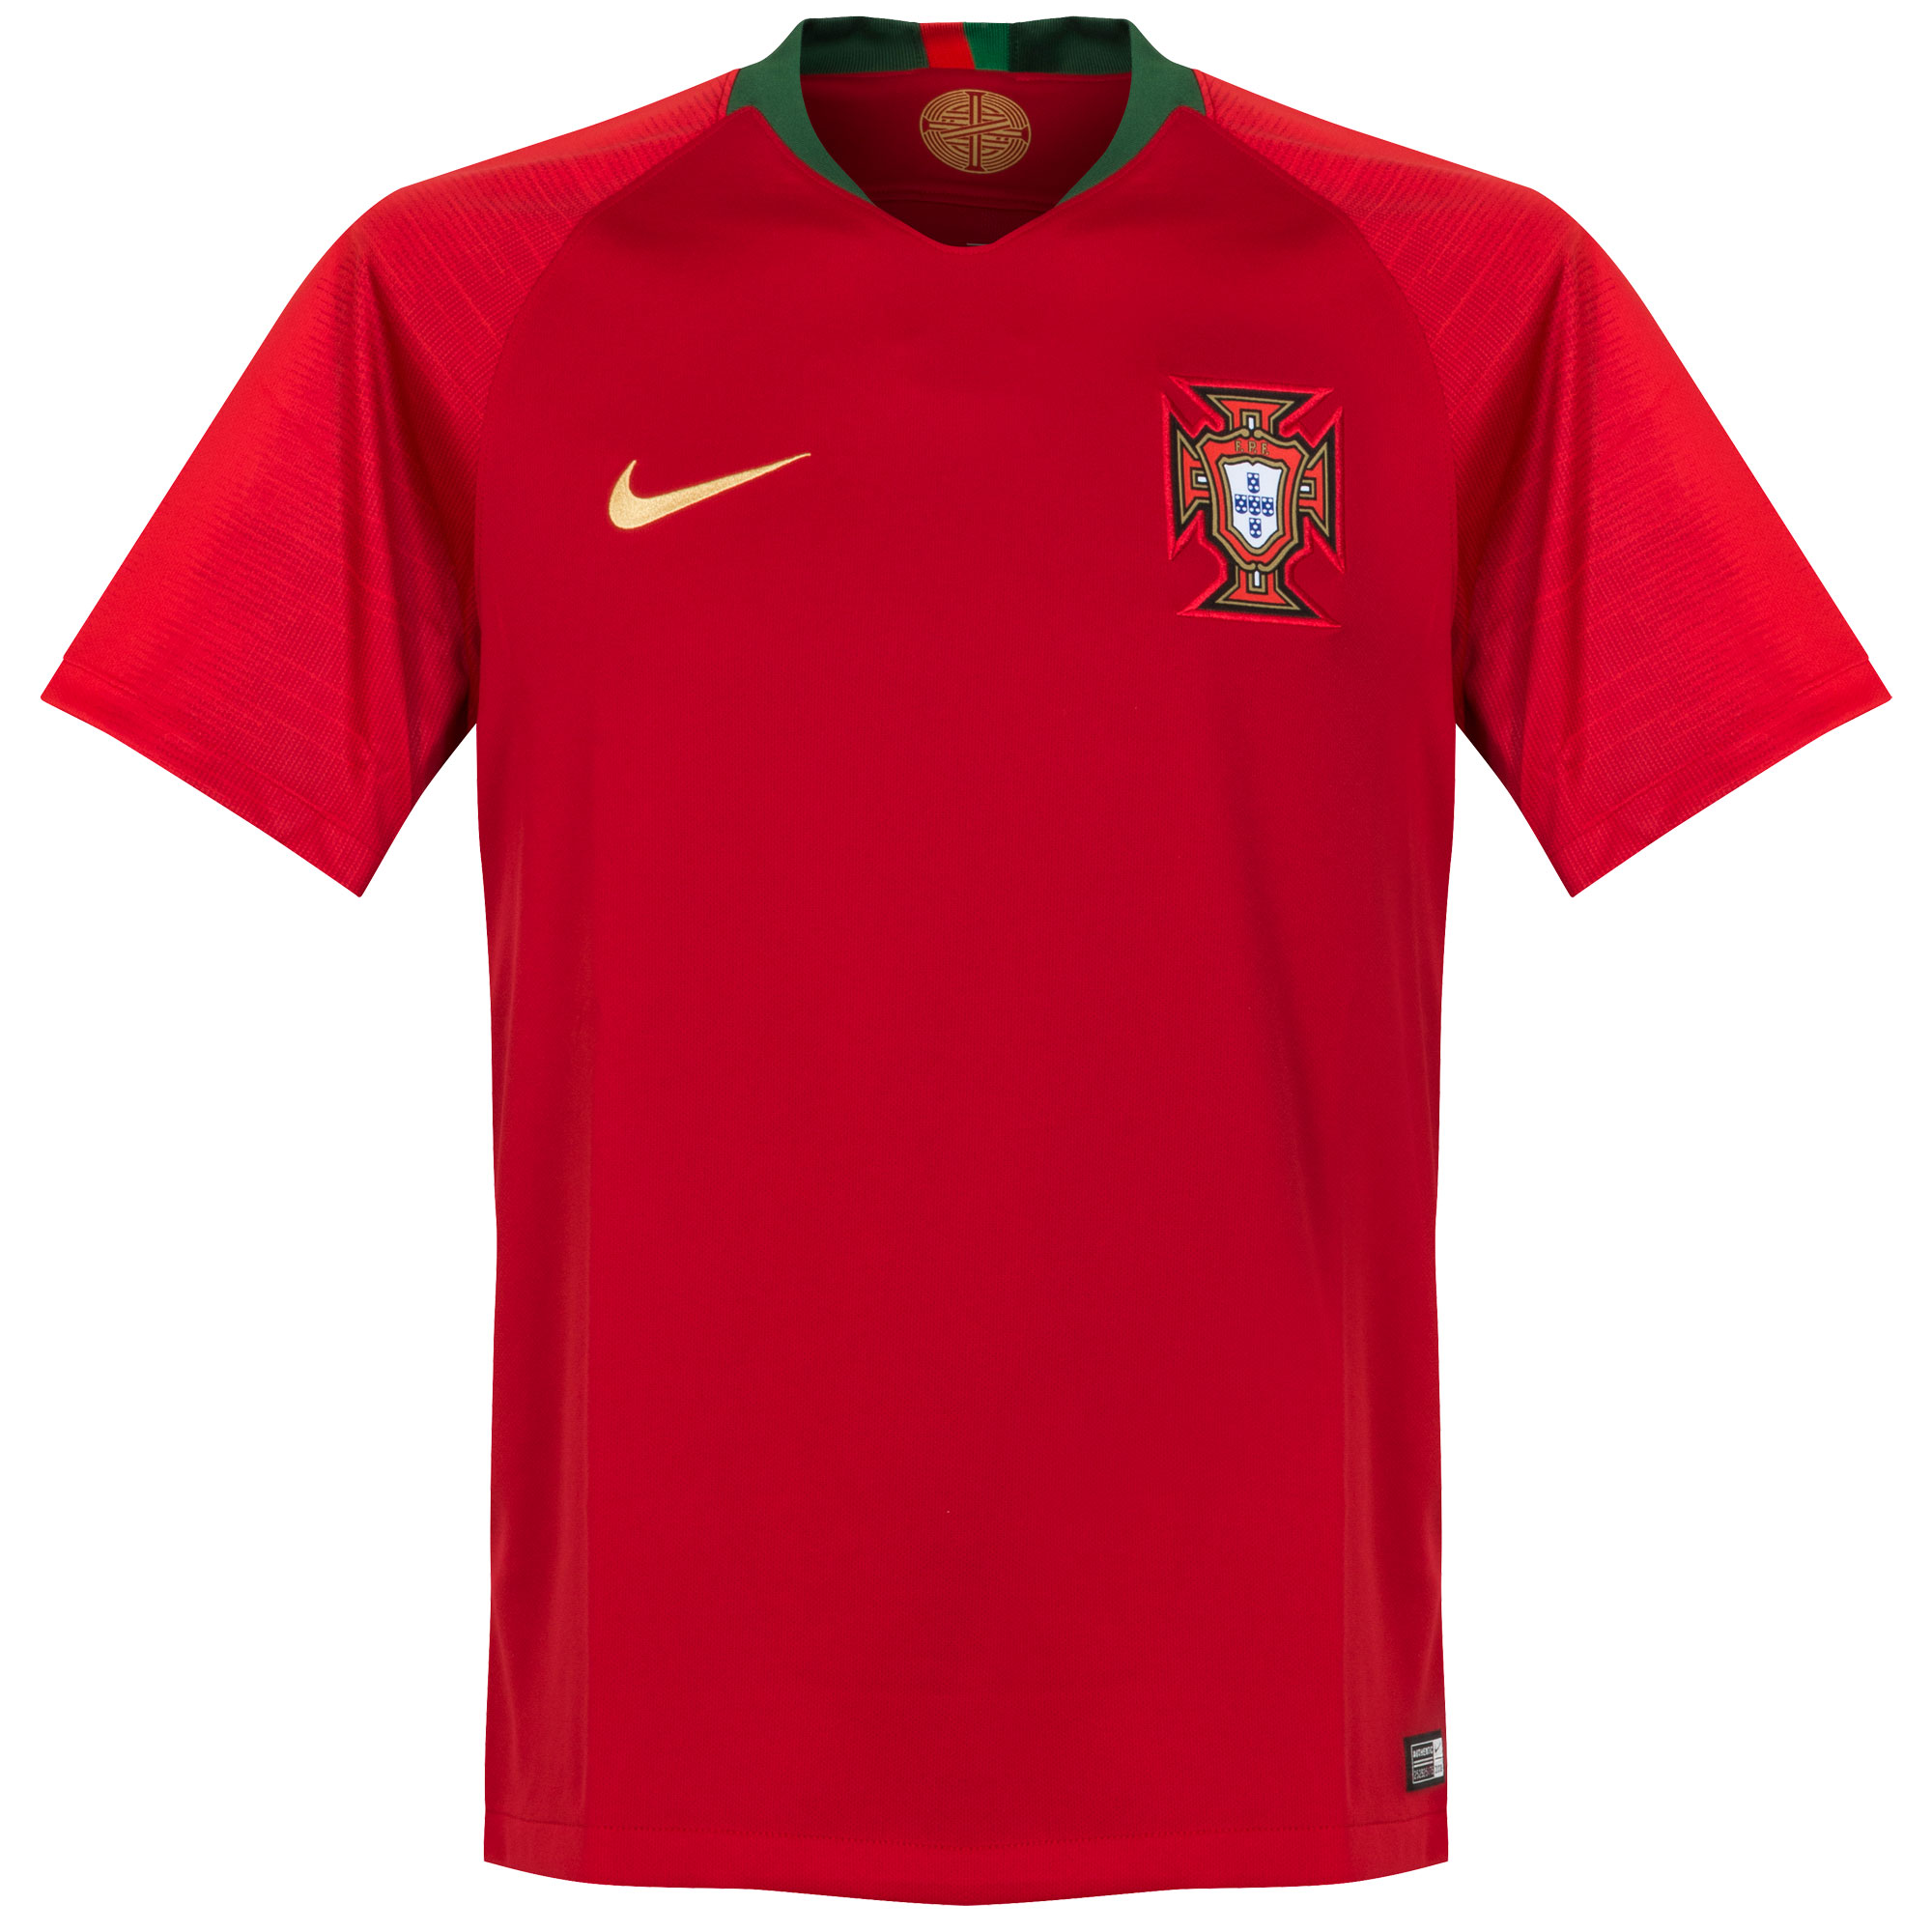 Portugal Home football shirt 2014 - 2016.